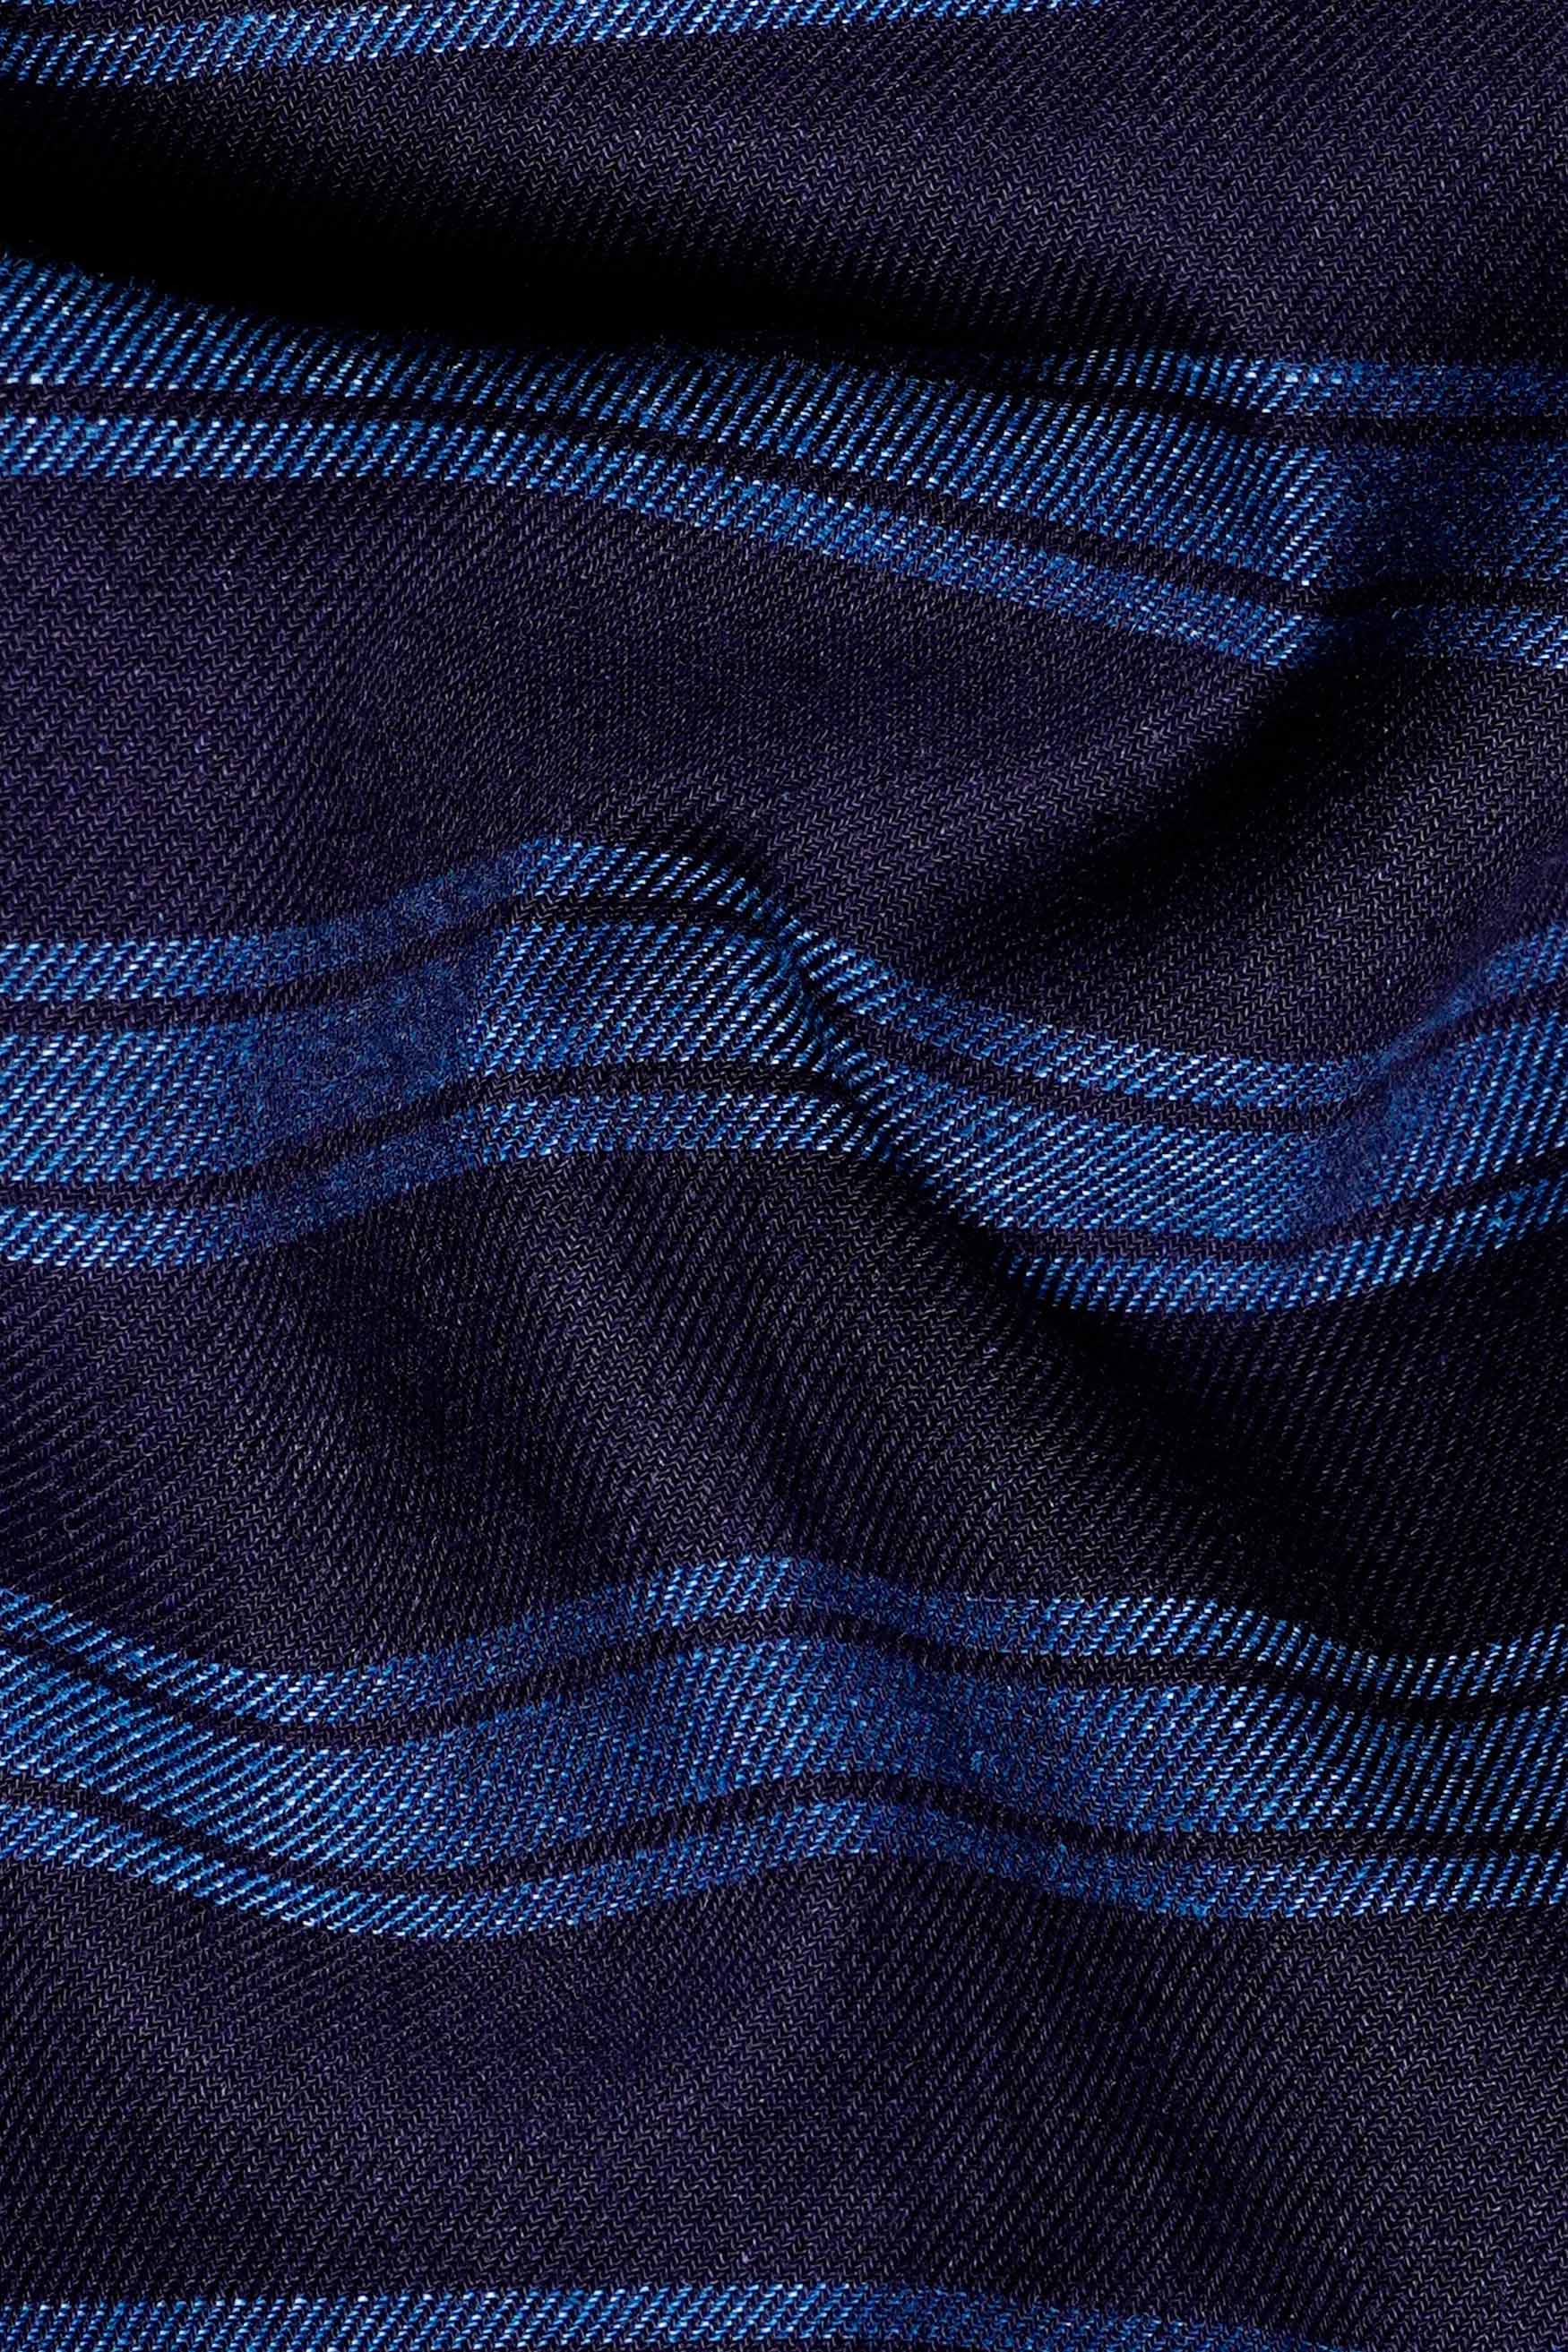 Indigo Blue and Lapis Blue Striped Chambray Shirt 11506-38, 11506-H-38, 11506-39, 11506-H-39, 11506-40, 11506-H-40, 11506-42, 11506-H-42, 11506-44, 11506-H-44, 11506-46, 11506-H-46, 11506-48, 11506-H-48, 11506-50, 11506-H-50, 11506-52, 11506-H-52